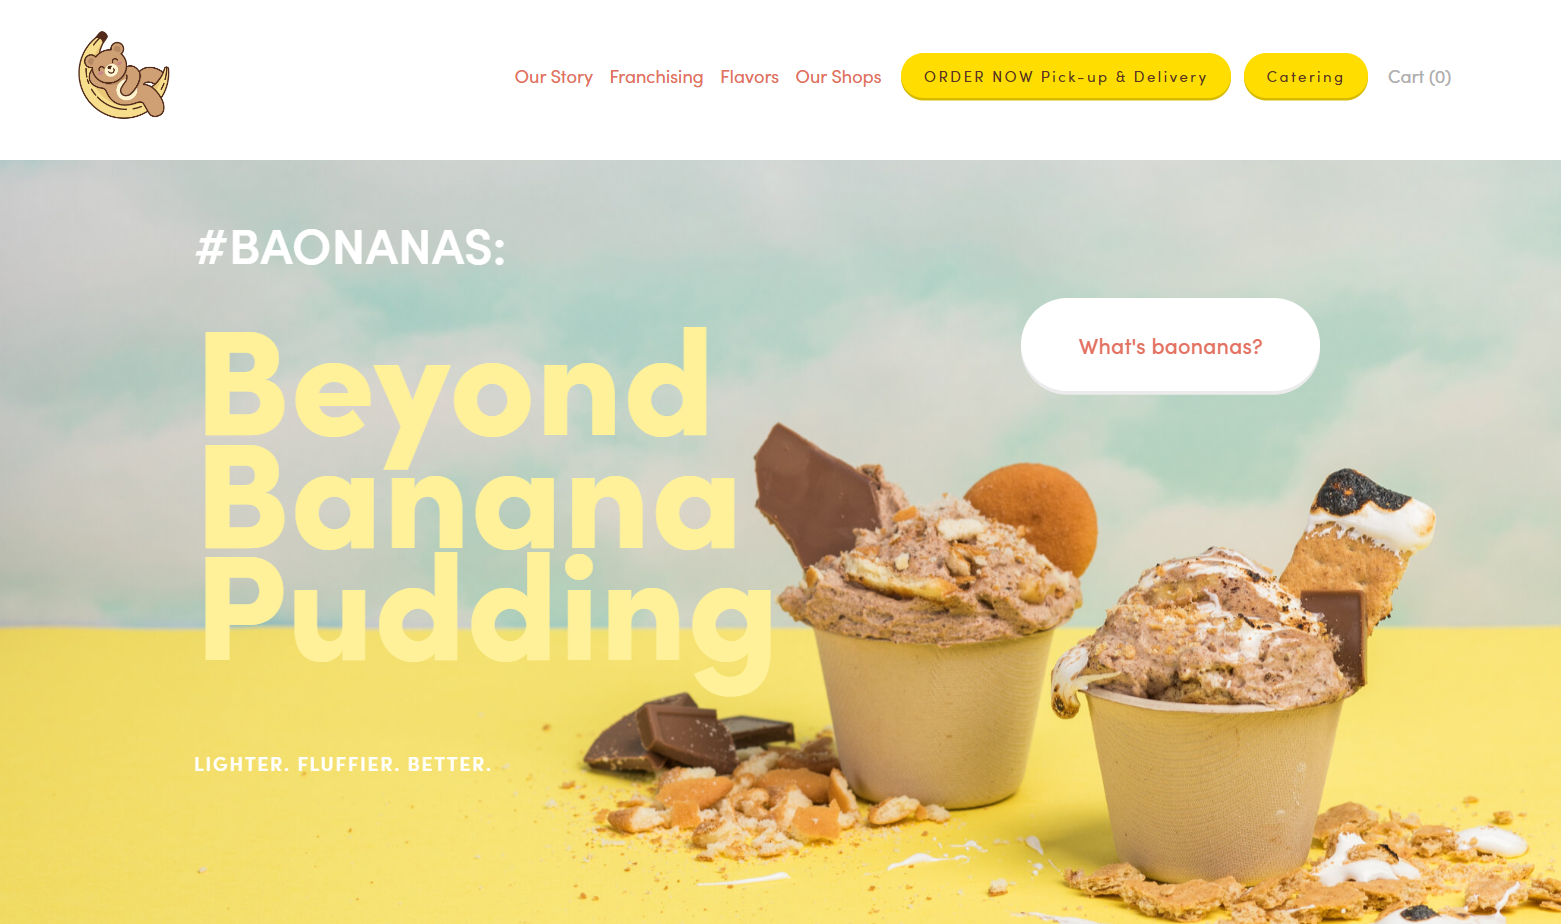 Food truck website design example from Baonanas.